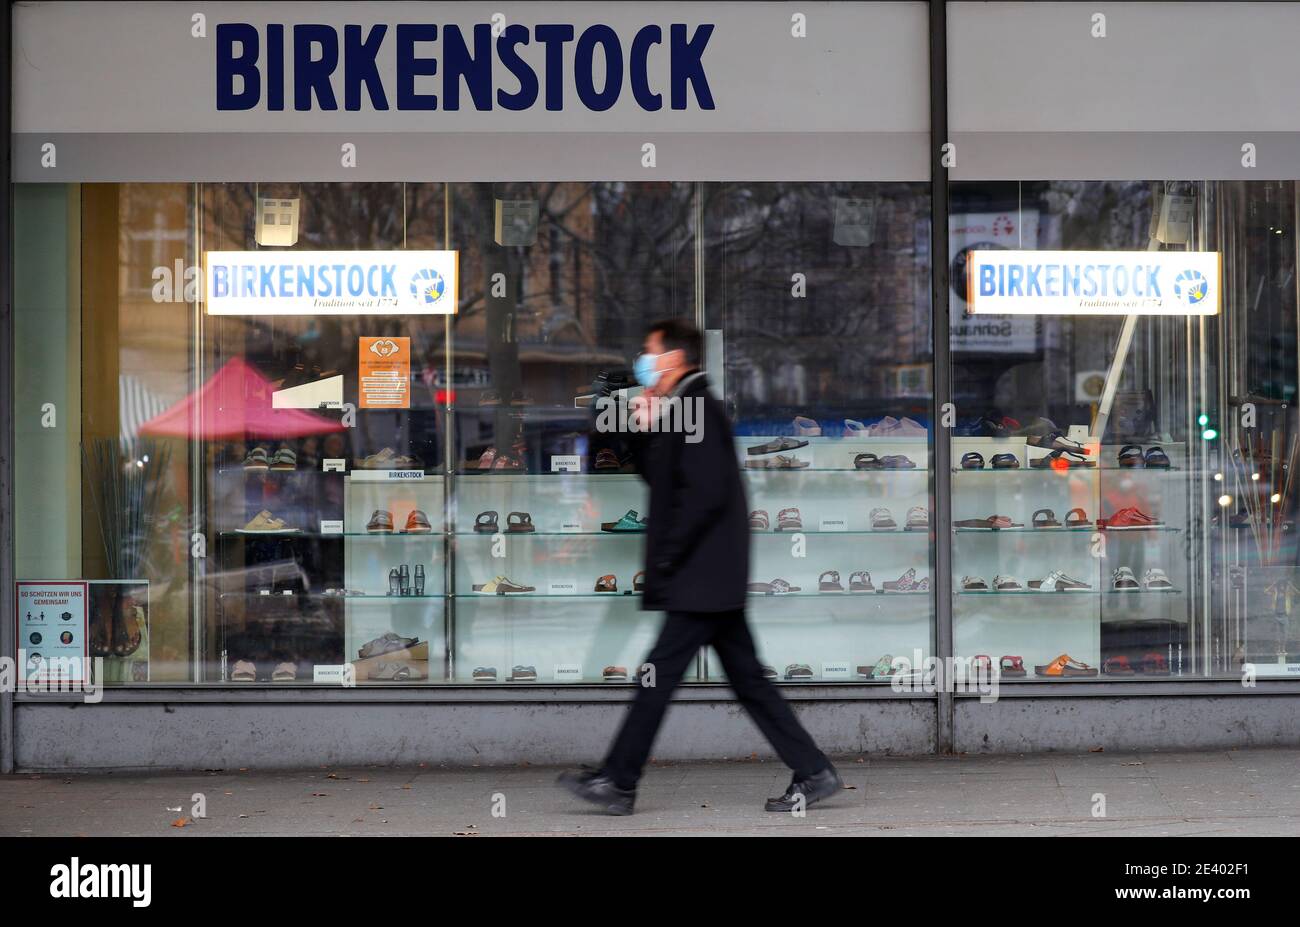 Birkenstock laden -Fotos und -Bildmaterial in hoher Auflösung – Alamy